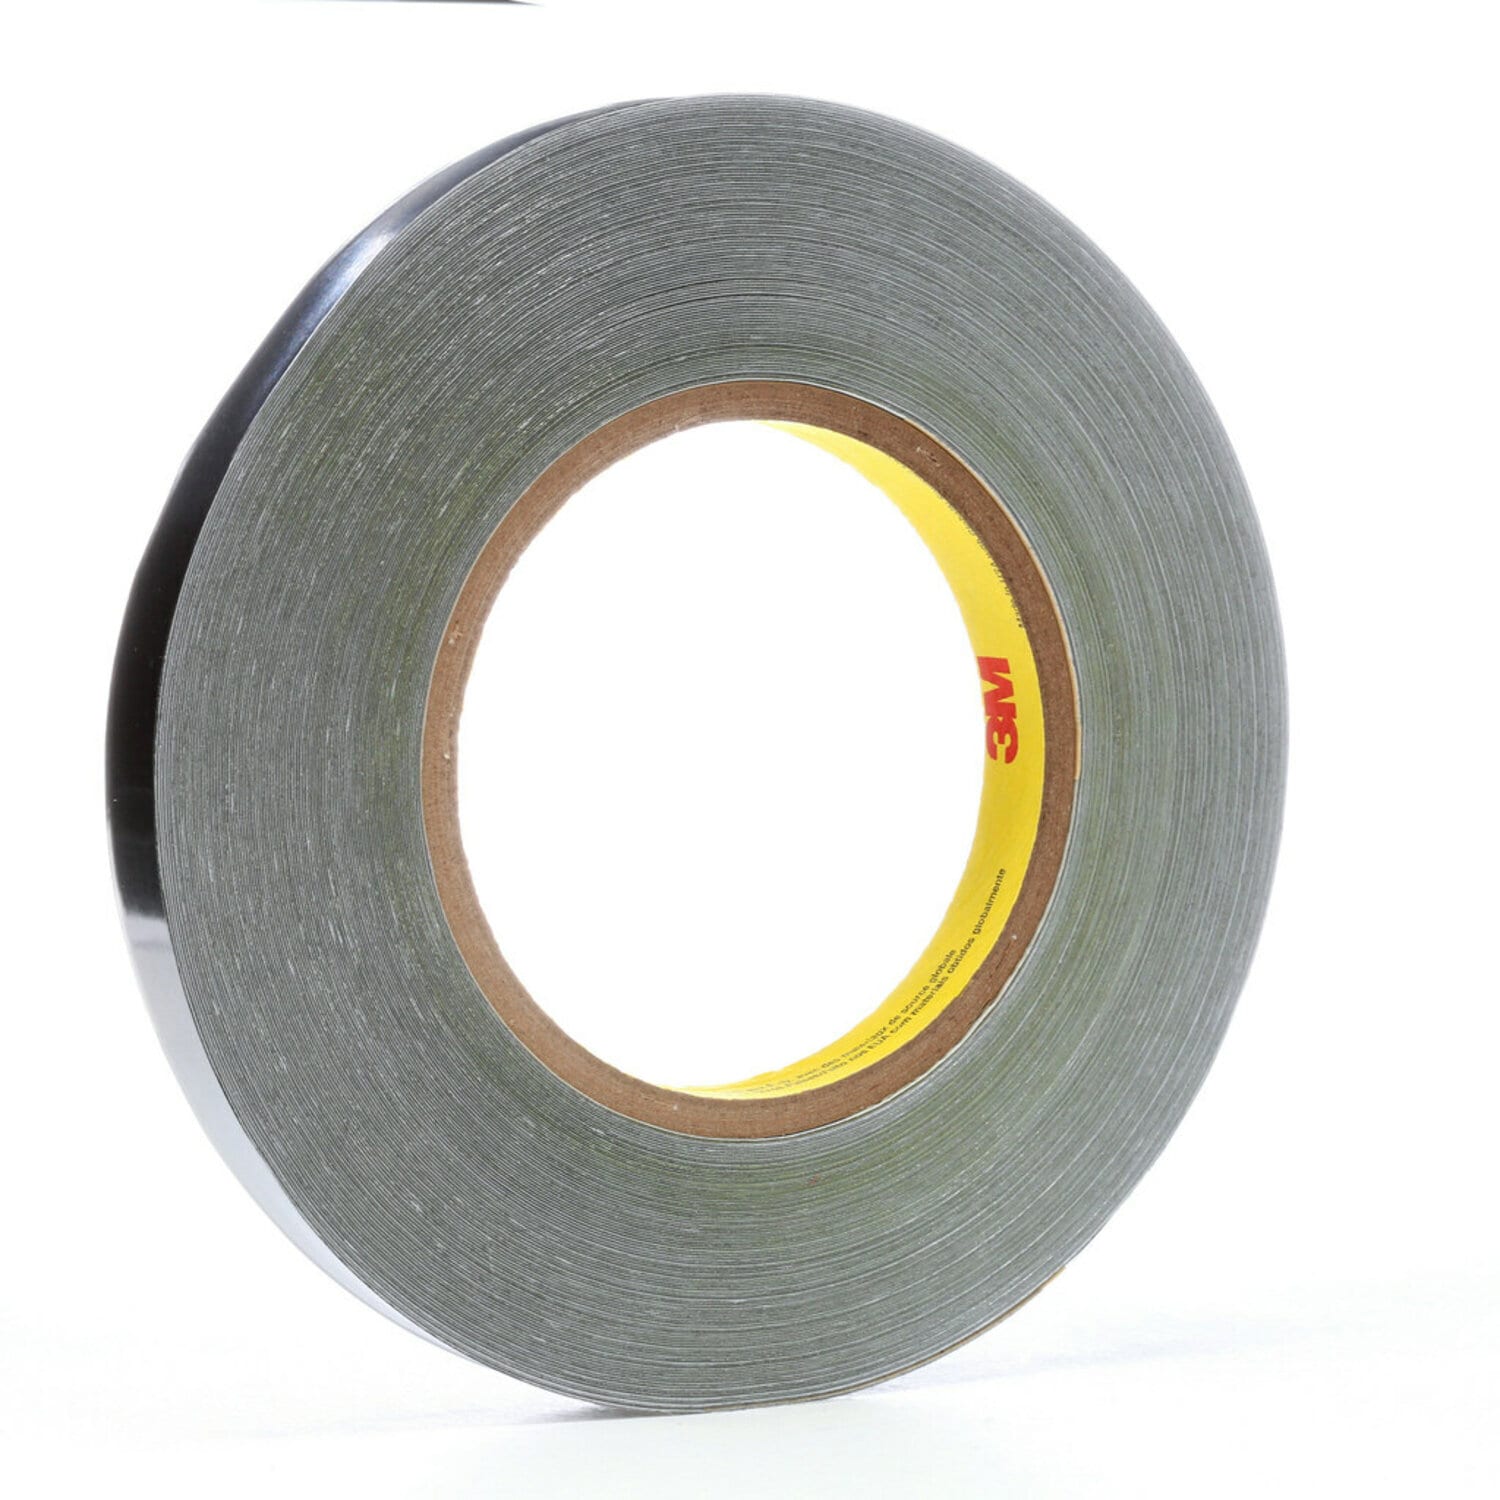 7000029006 - 3M Lead Foil Tape 420, Dark Silver, 3/4 in x 36 yd, 6.8 mil, 12 rolls
per case